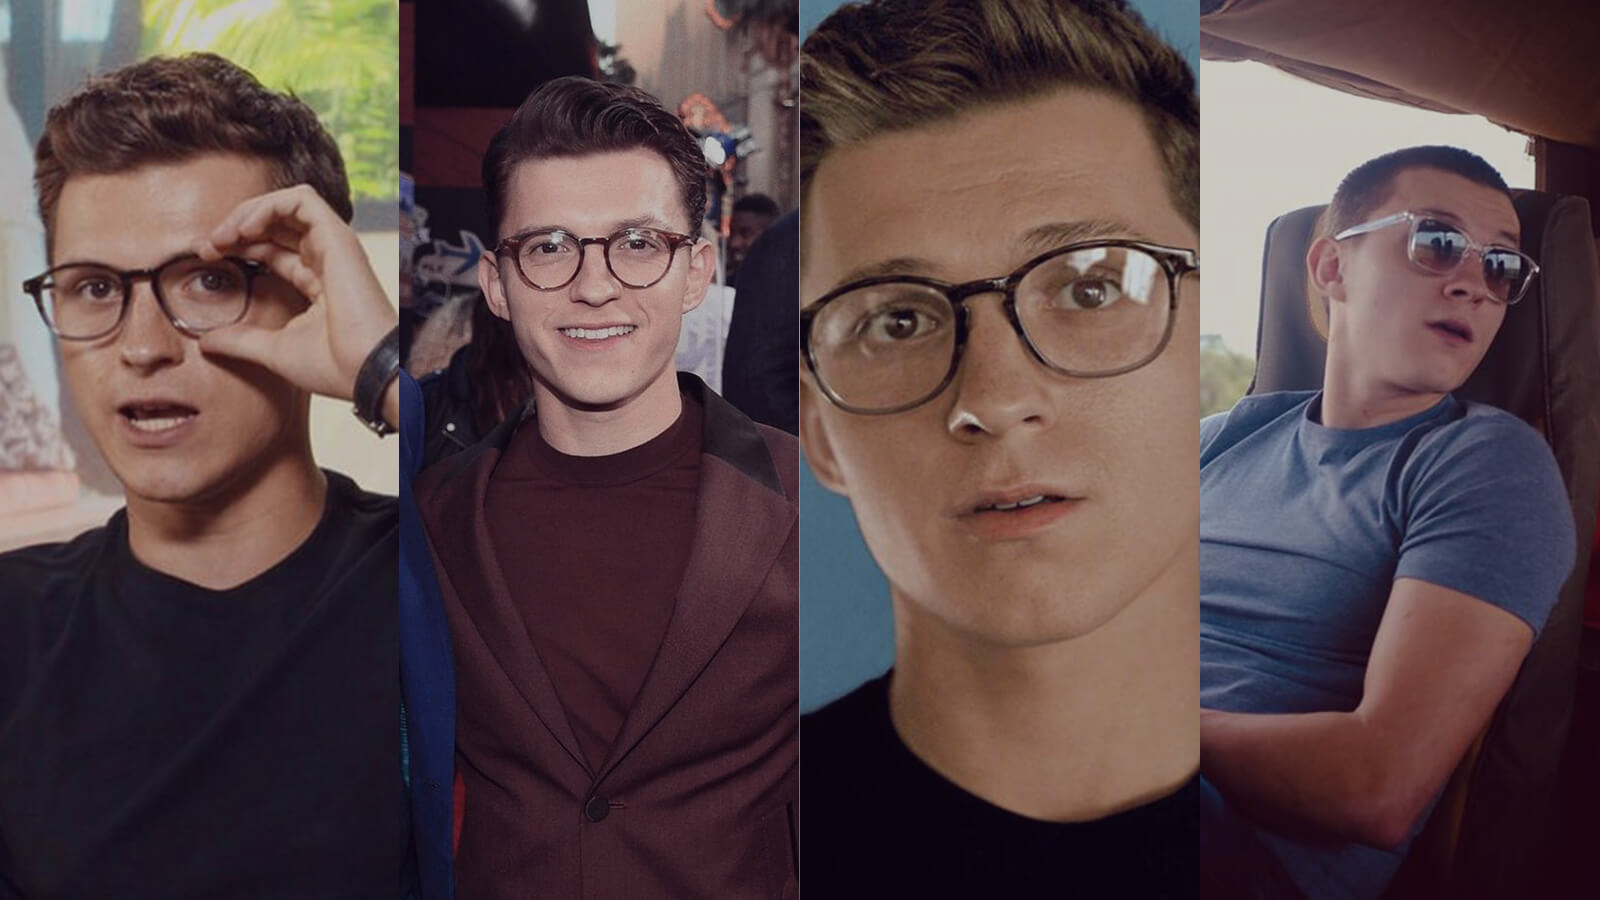 Spiderman Glasses